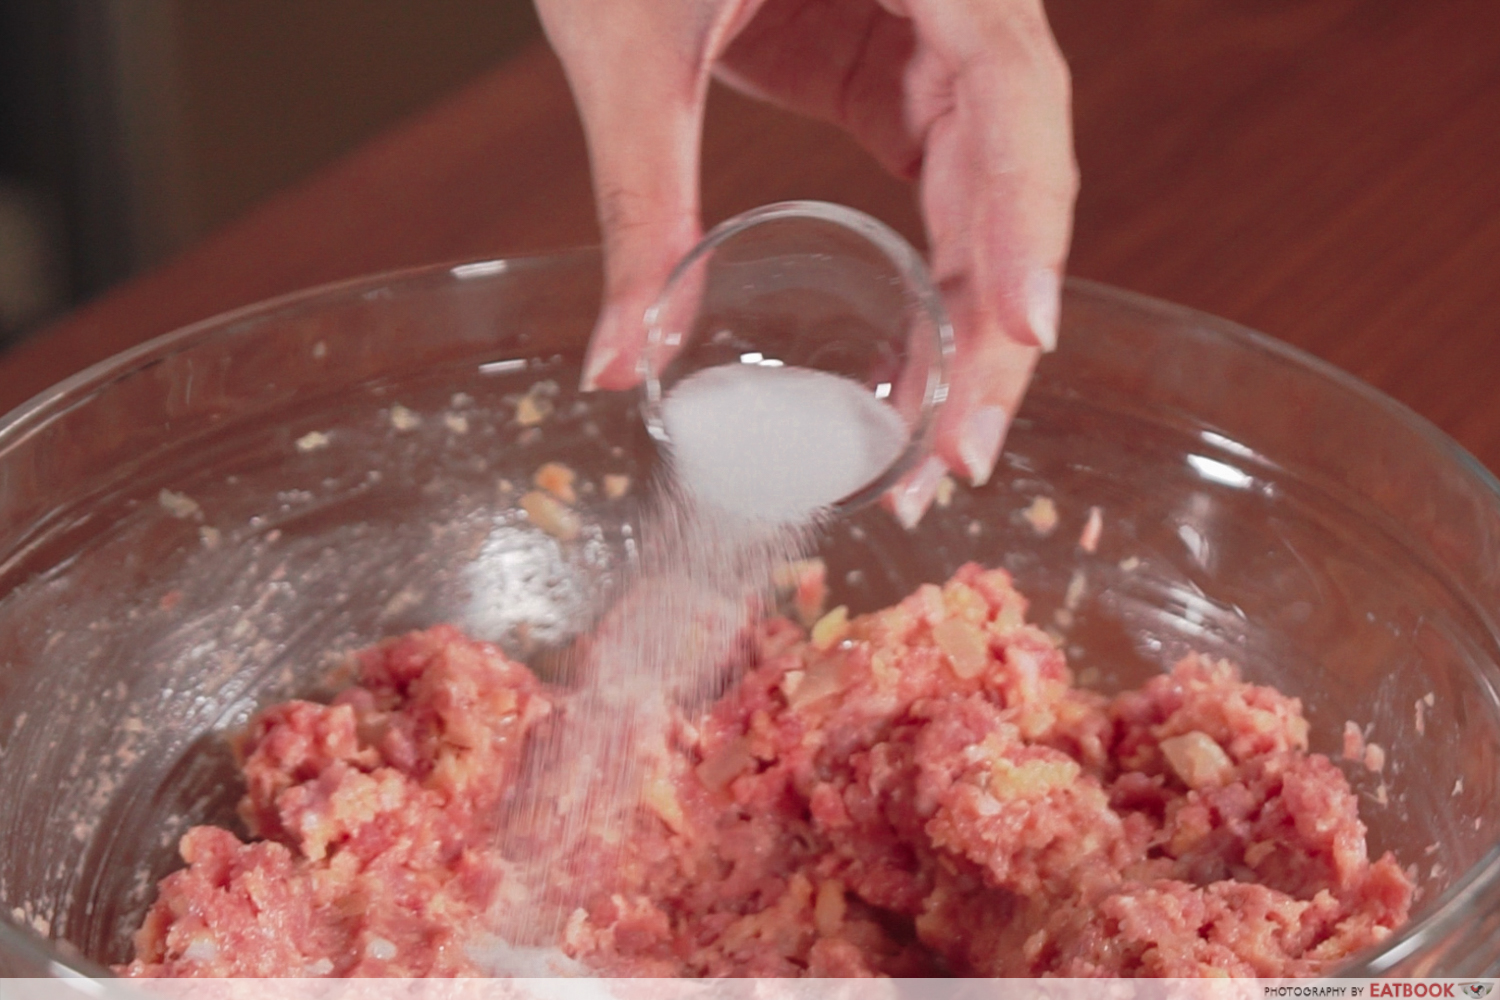 IKEA Meatballs recipe - Addition of salt